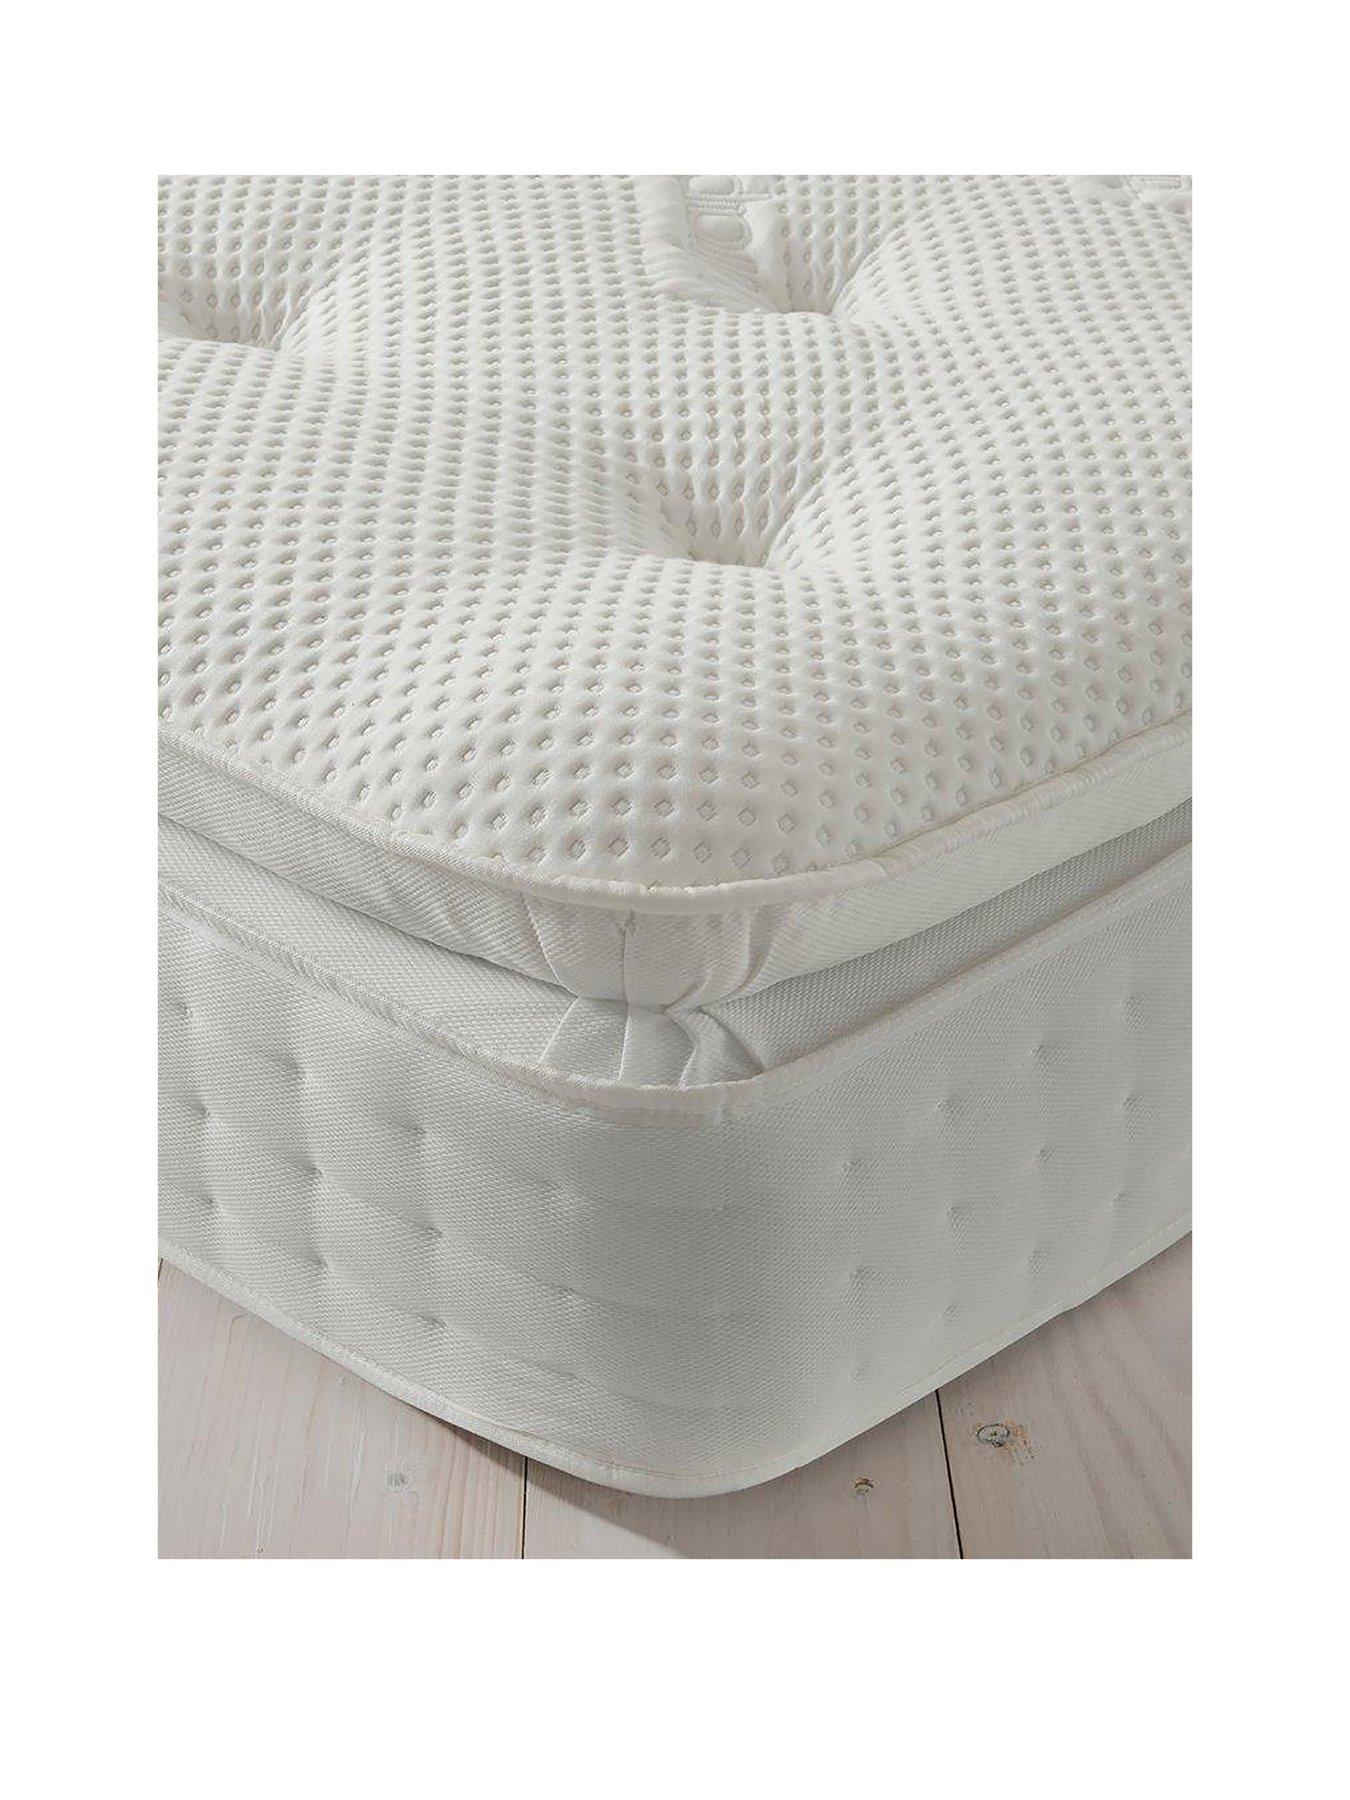 YURRO Upholstery Foam,High Density Sofa Cushion Replacement Memory  Foams,60/80/100/120/150/180/200 cm Long Mattress,Seat Pads Foam Padding  Sheet,Cut